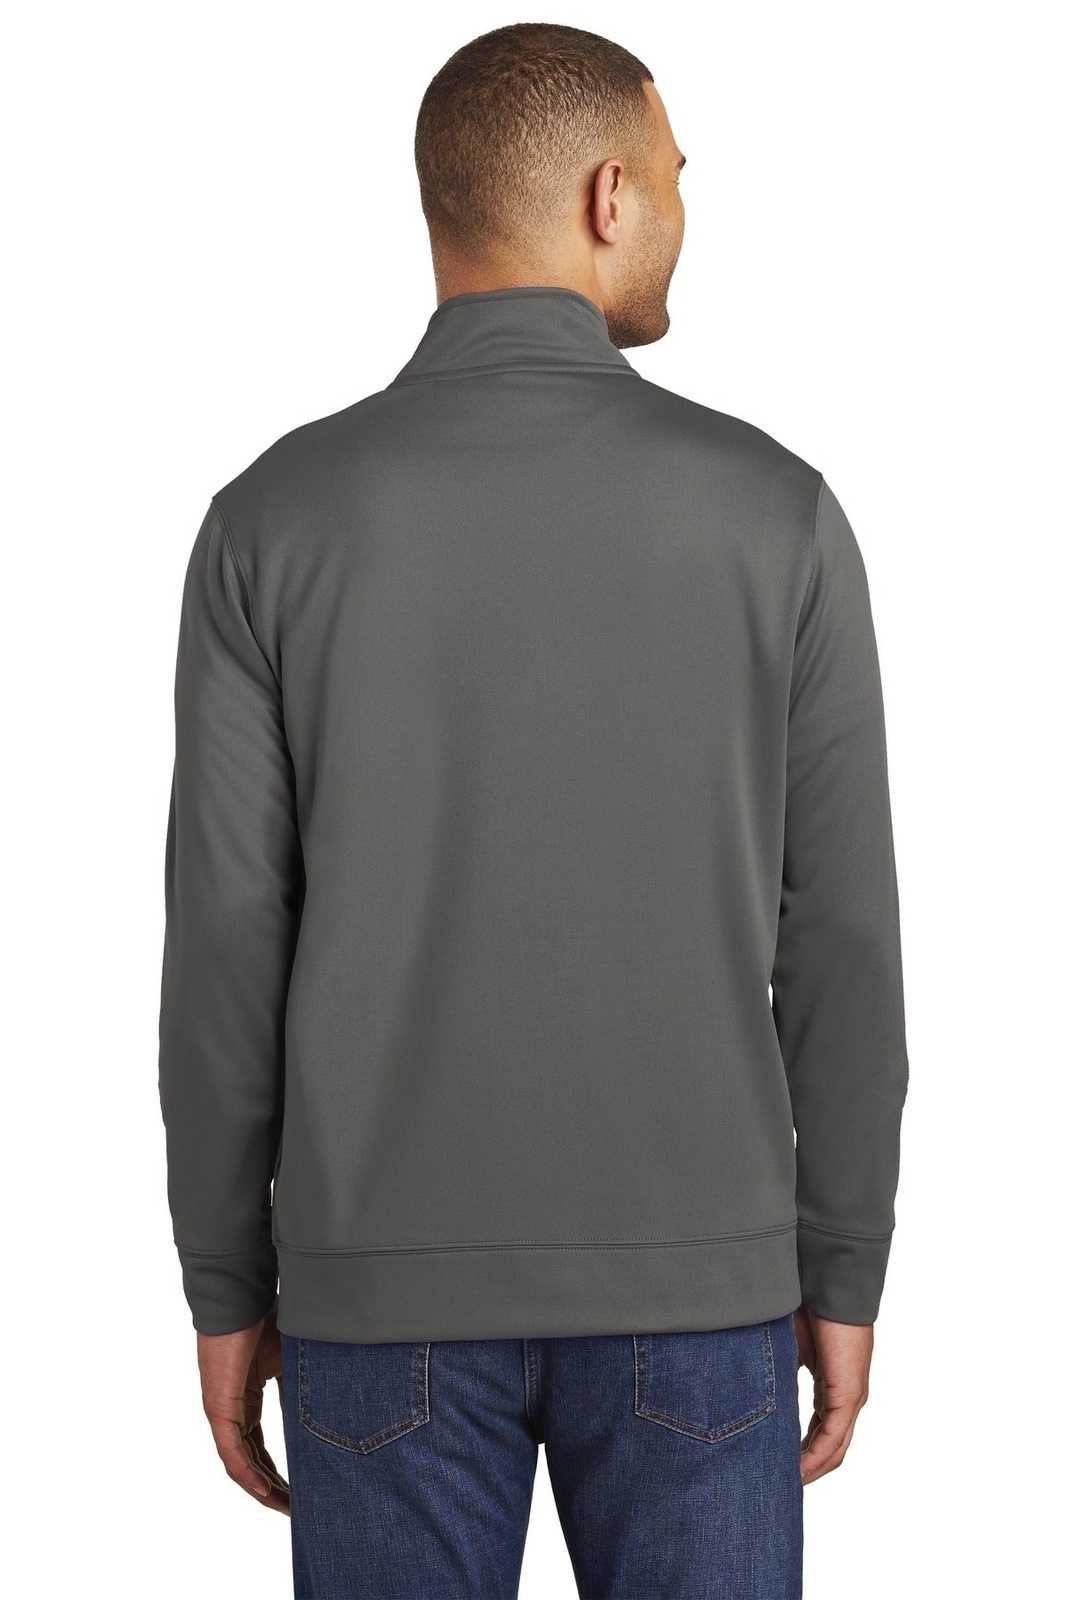 Port & Company PC590Q Fleece 1/4-Zip Pullover Sweatshirt - Charcoal - HIT a Double - 1